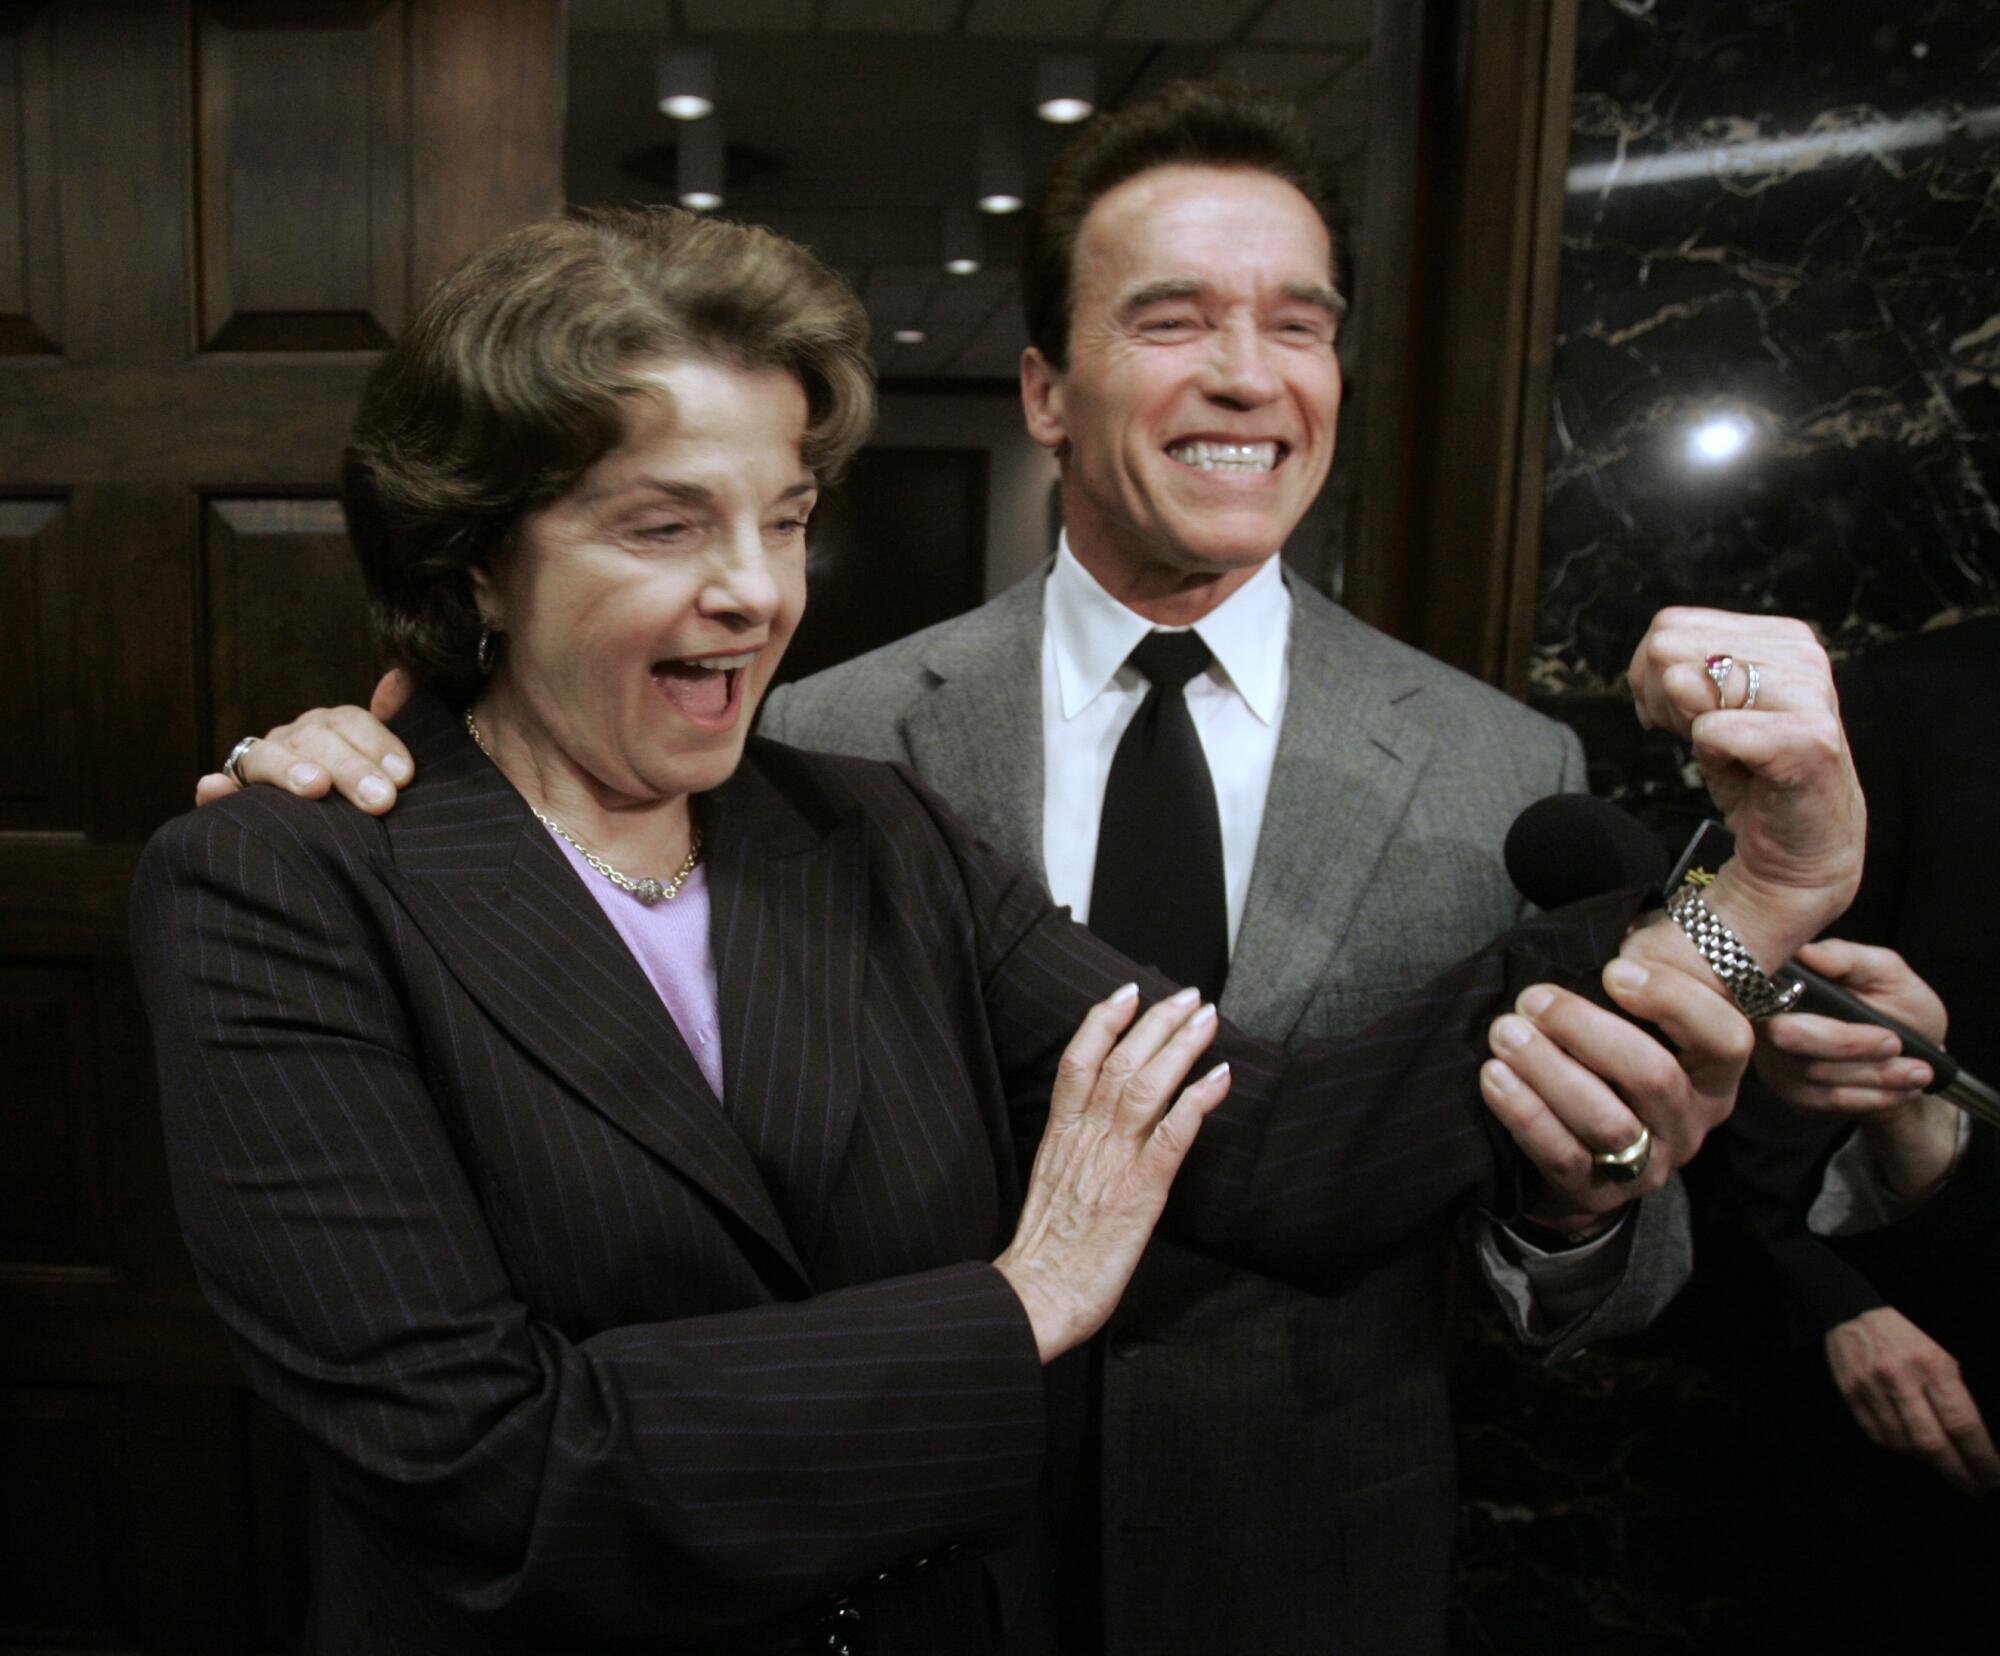 With the help of Gov. Arnold Schwarzenegger, U.S. Senator Dianne Feinstein flexes her bicep 